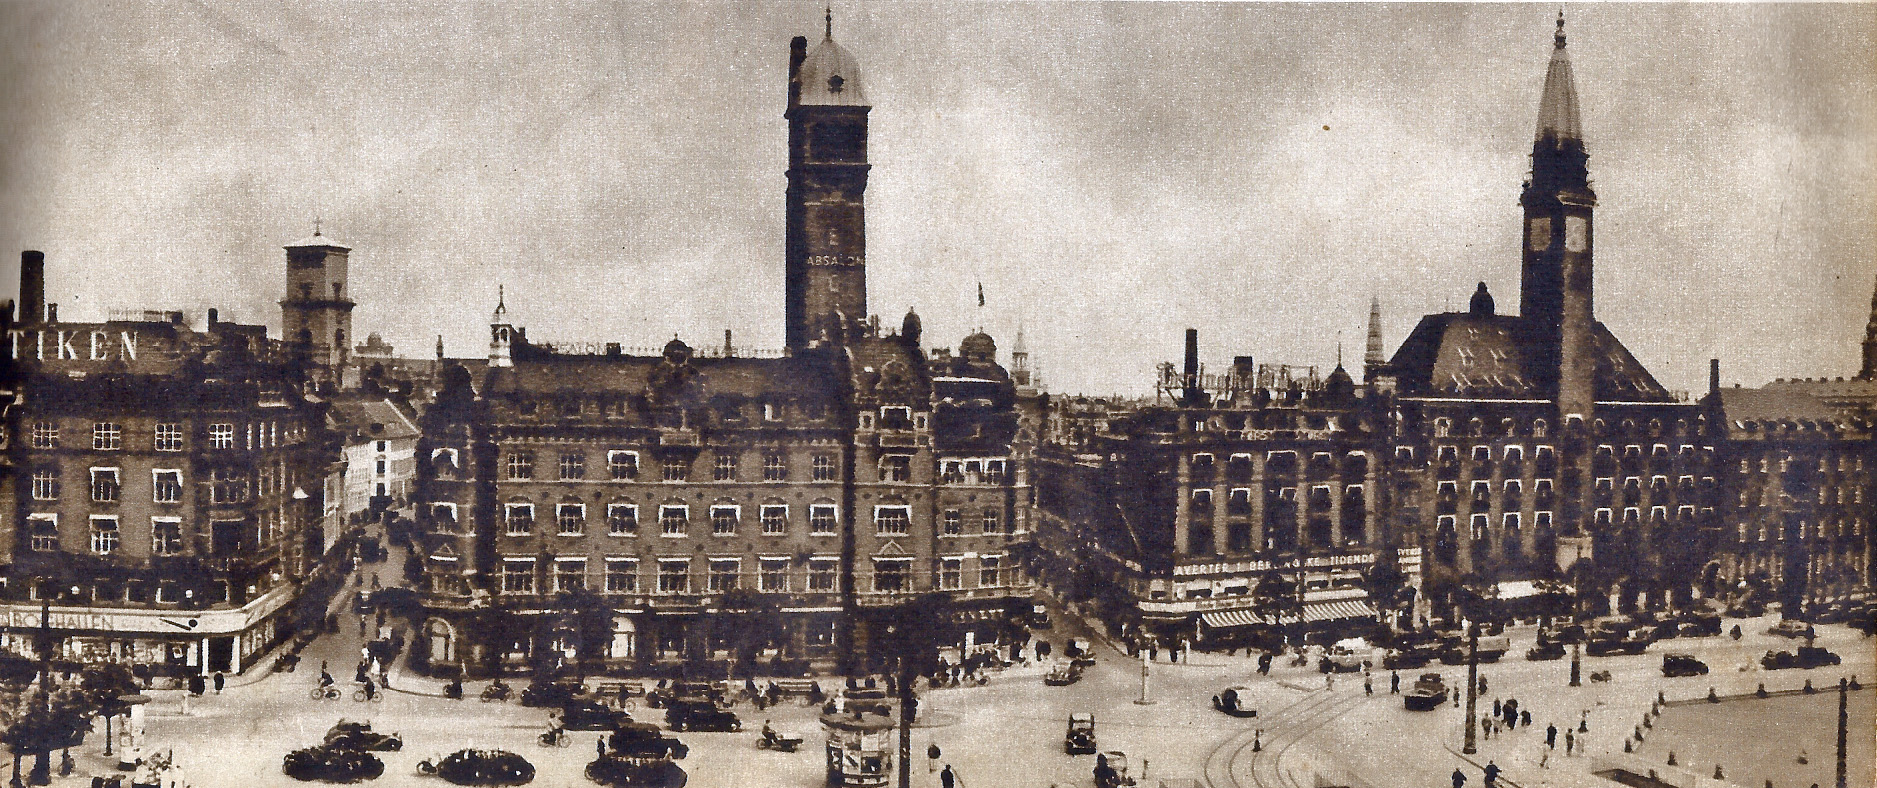 Raadhuspladsen 1938